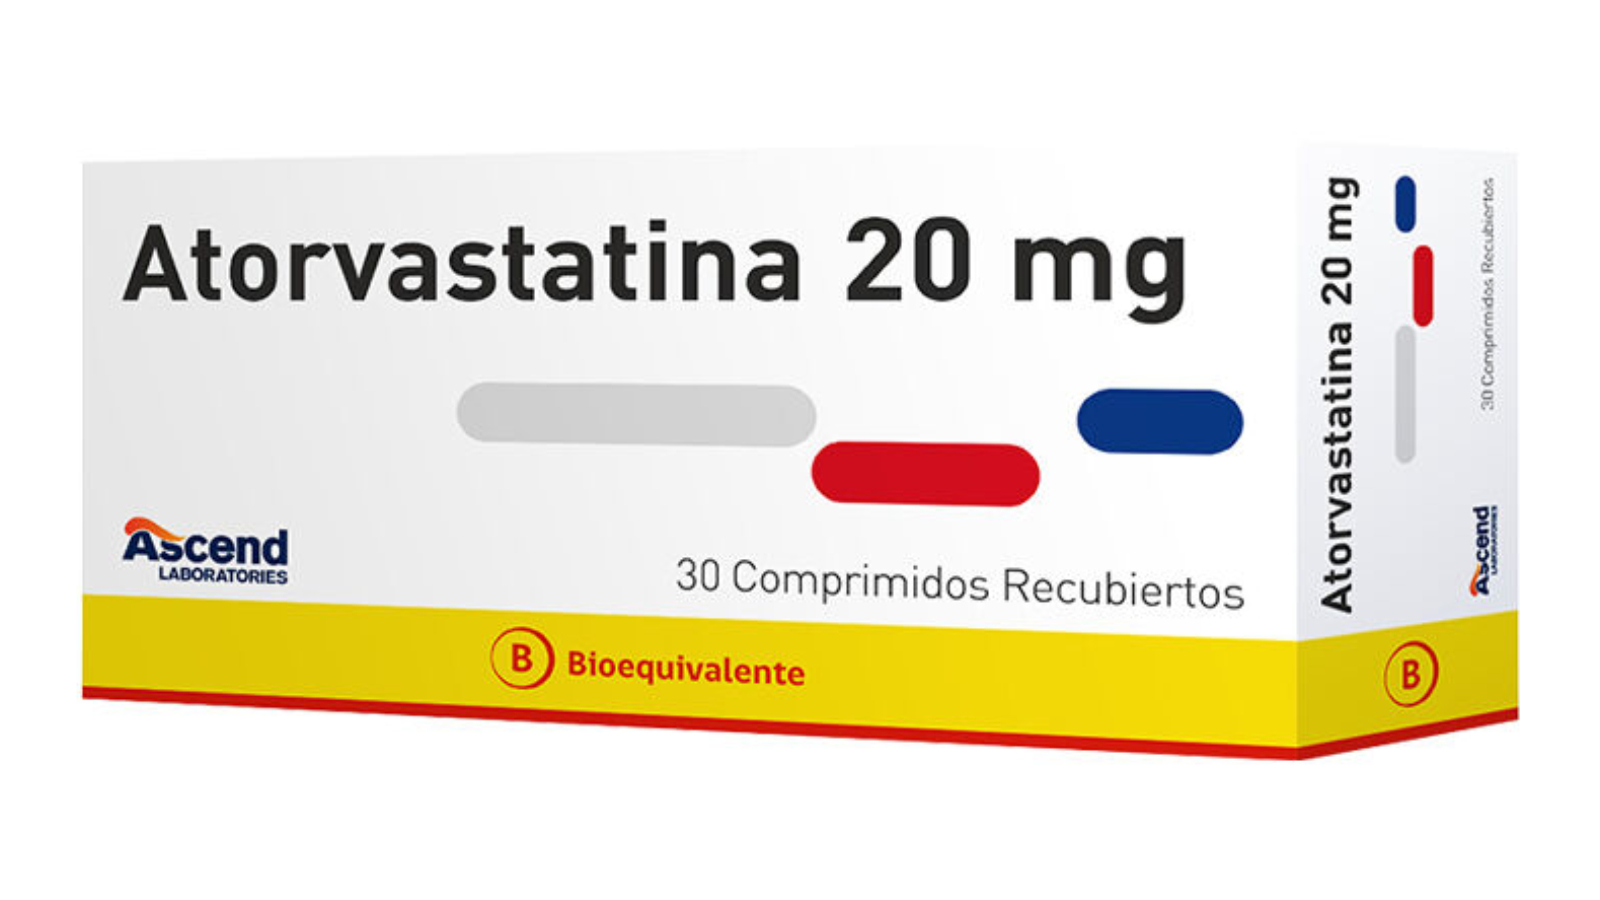 Caja de medicamento "Atorvastatina"